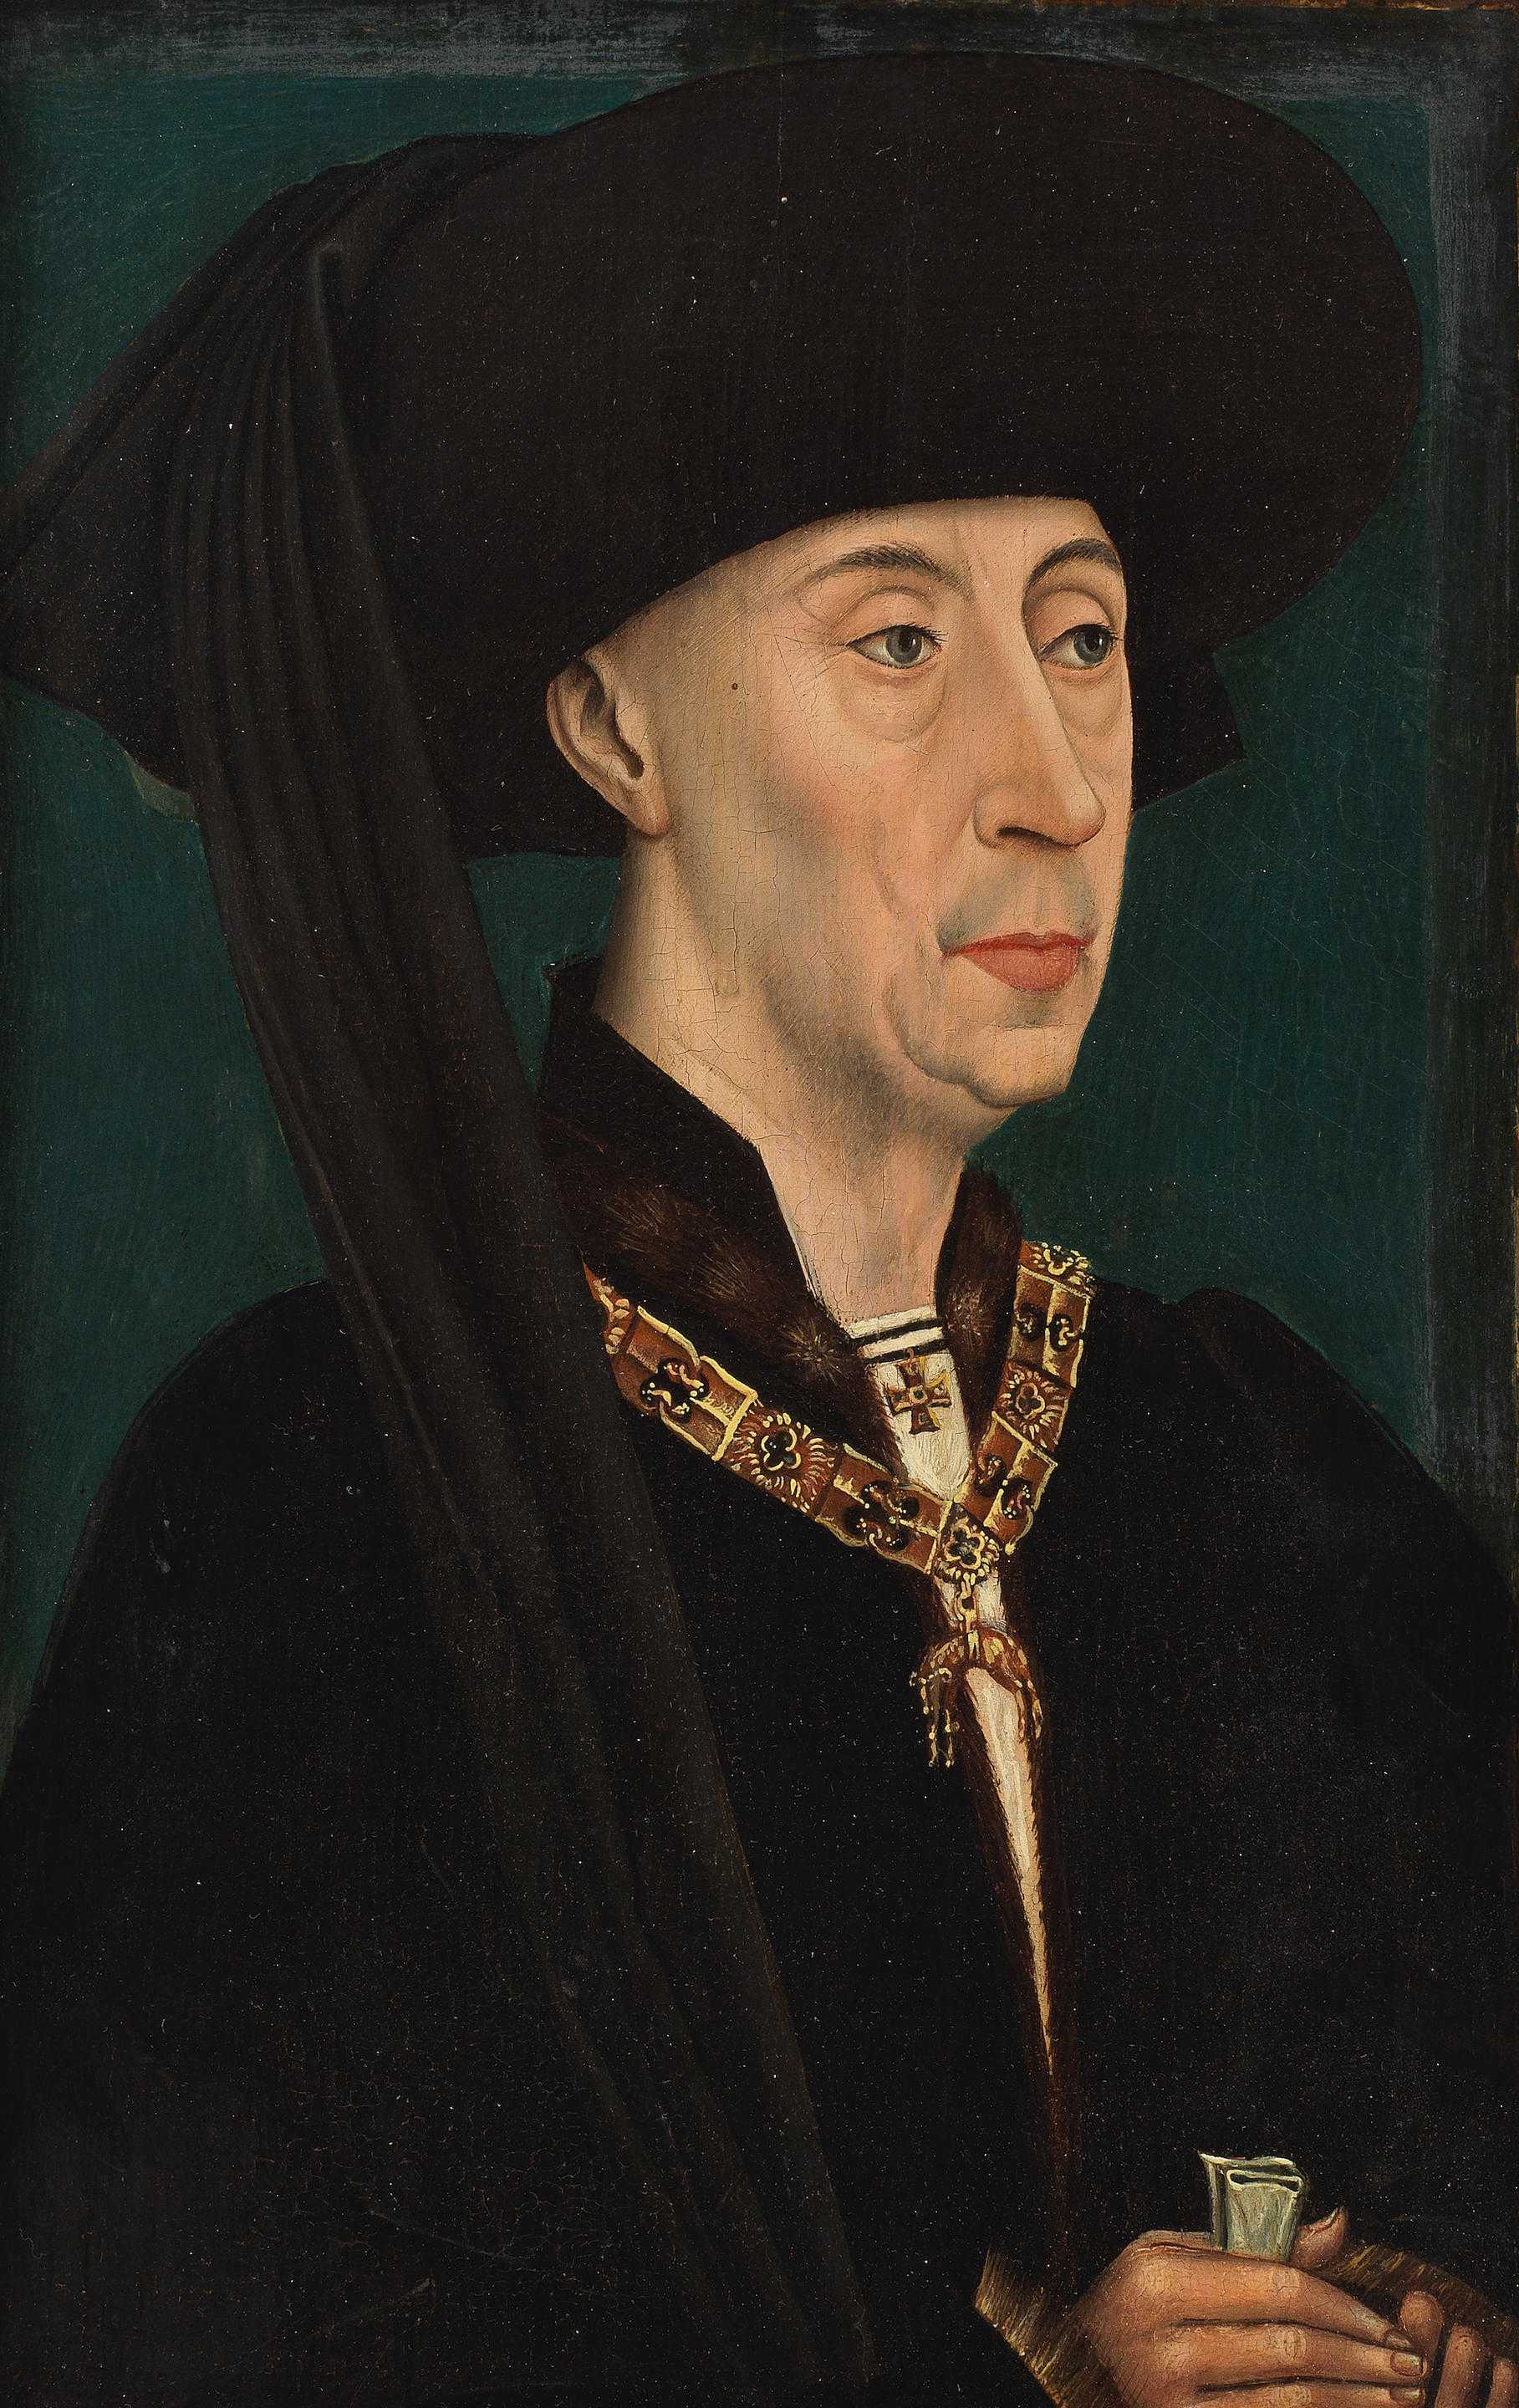 Portrait of Philip the Good after Rogier van der Weyden, which sold for £203,200 ($253,000) with buyer’s premium at Bonhams.